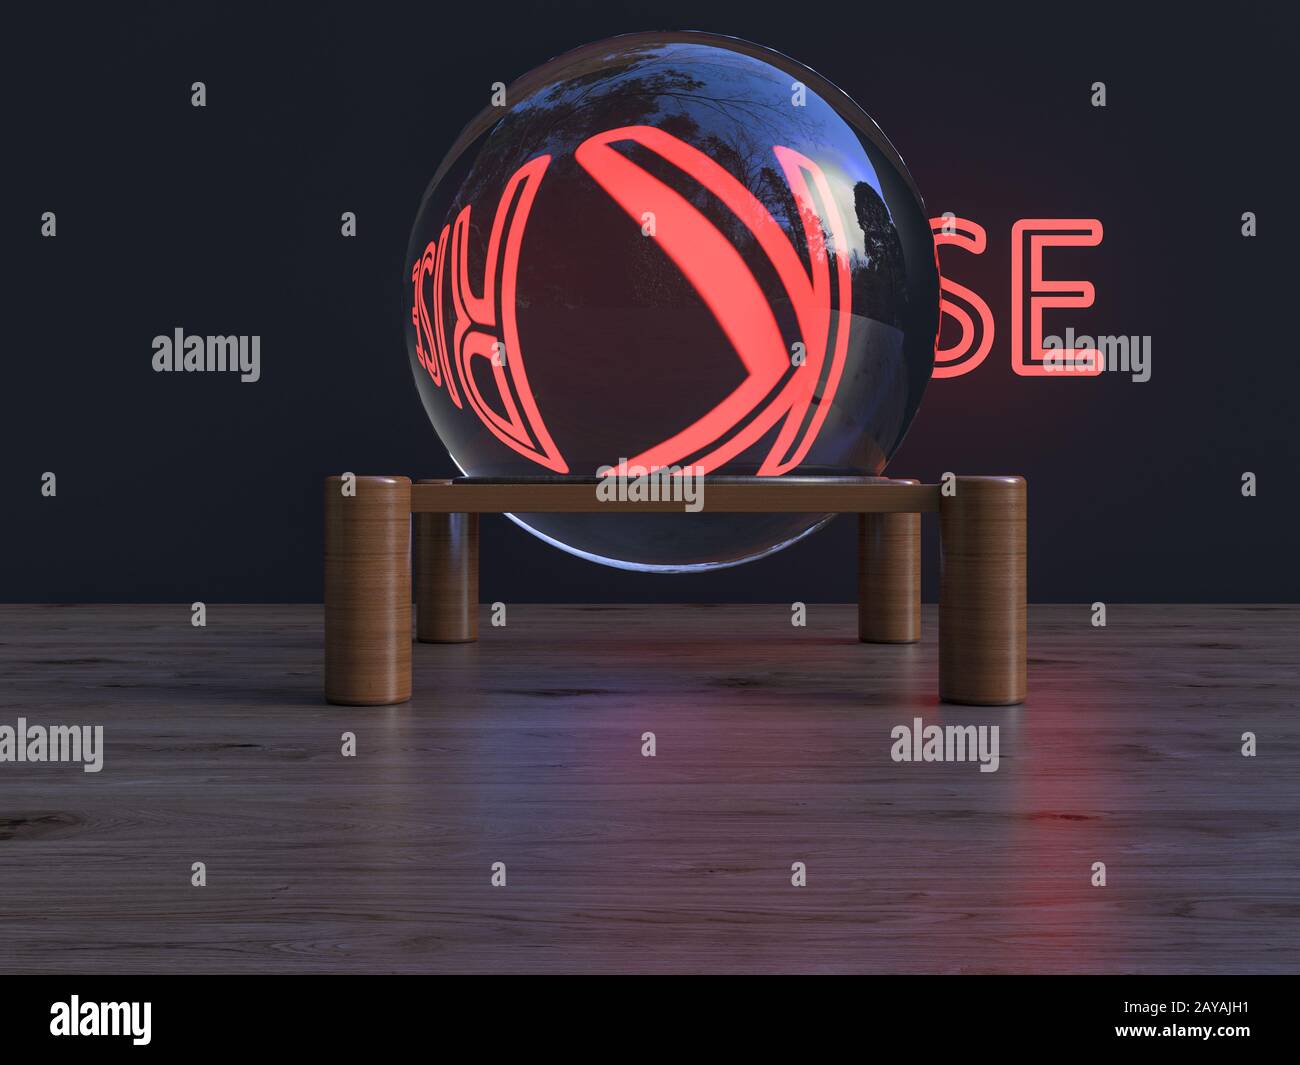 Quarz esfera ampliar la palabra Kise (alemán para crisis) Foto de stock